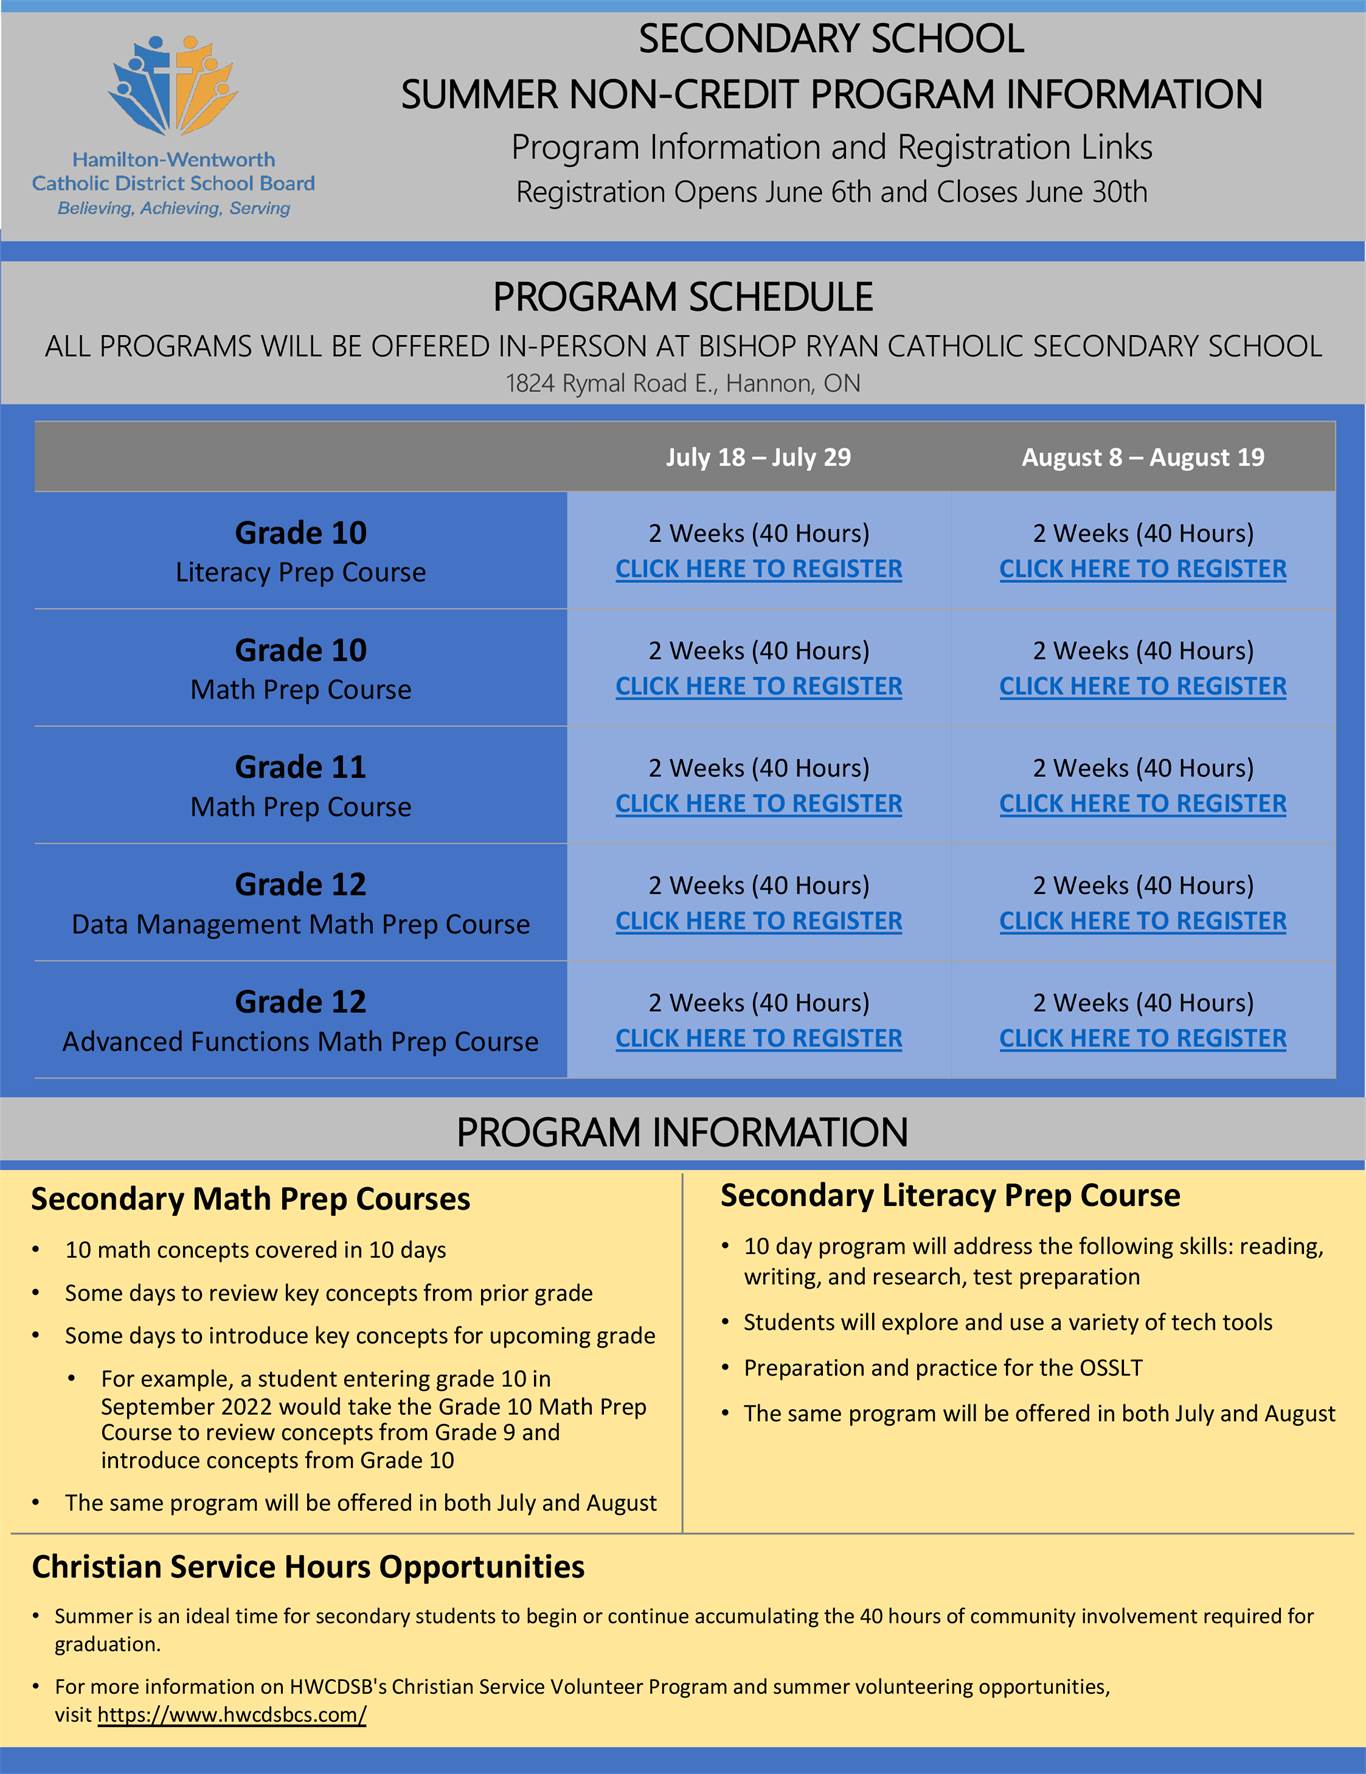 Secondary School Summer Non-Credit Program